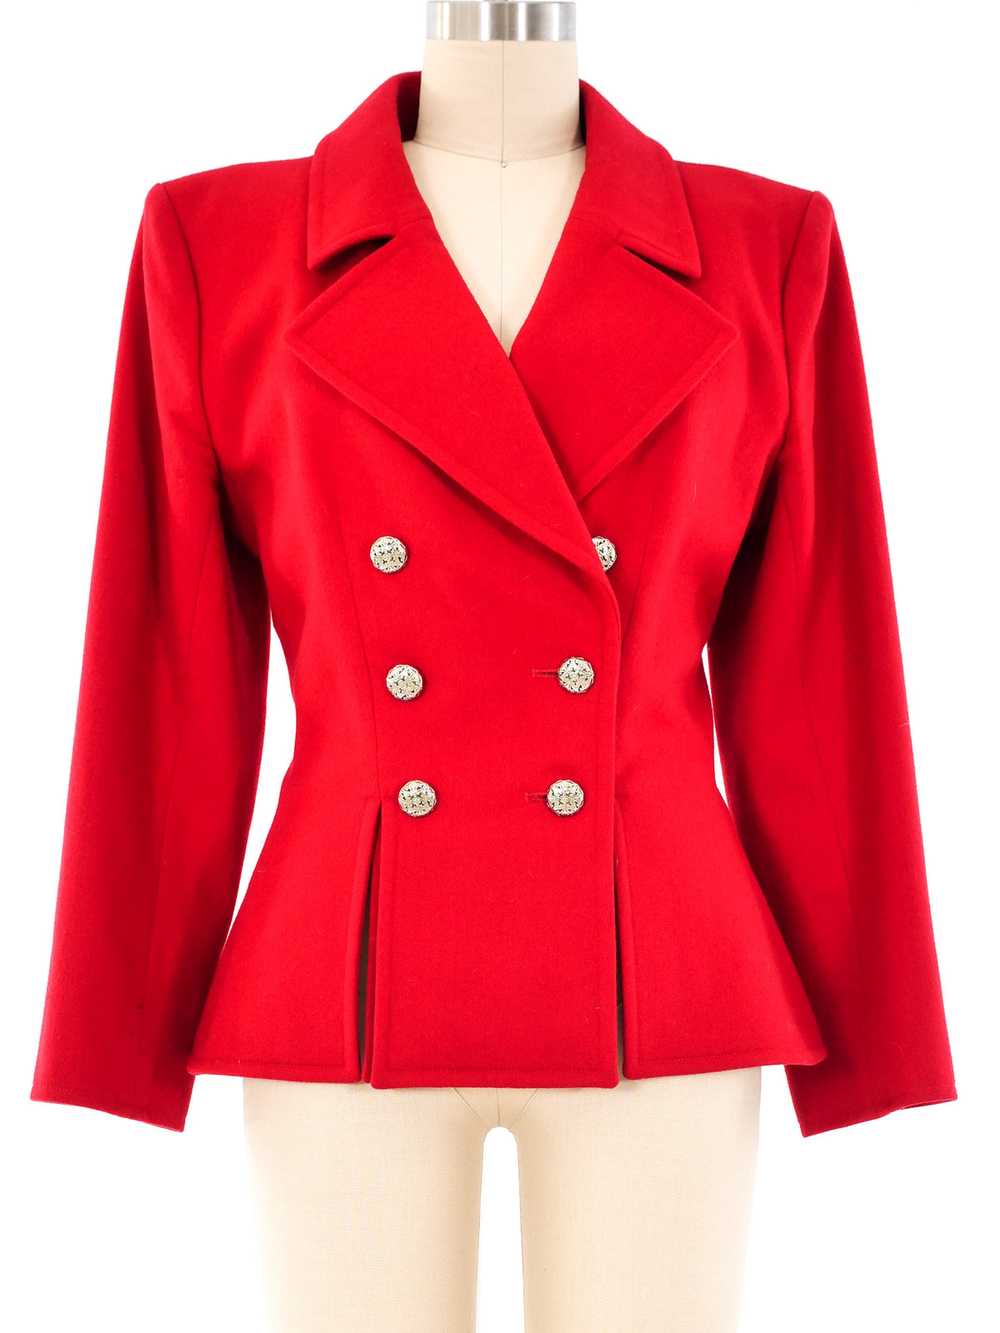 Yves Saint Laurent Red Wool Jacket - image 1